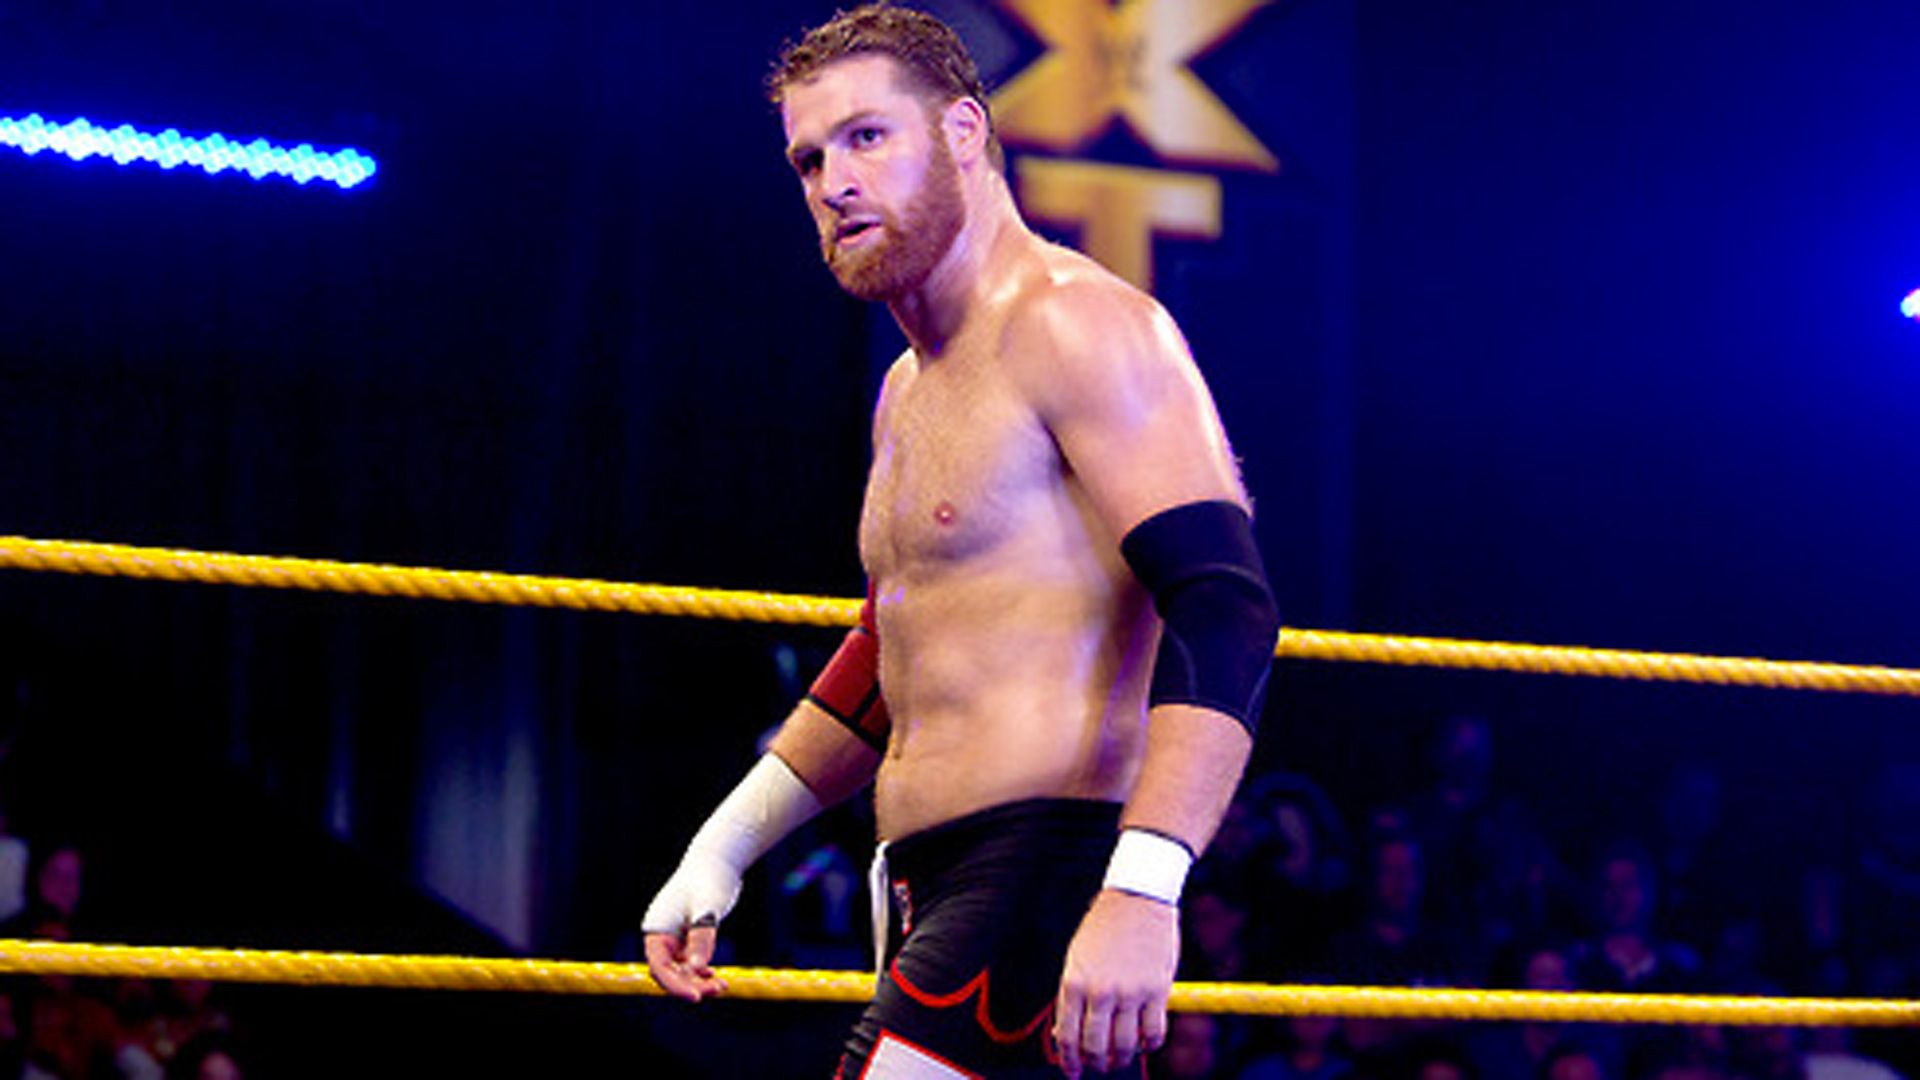 Sami Zayn suffers injury during long awaited WWE Raw debut